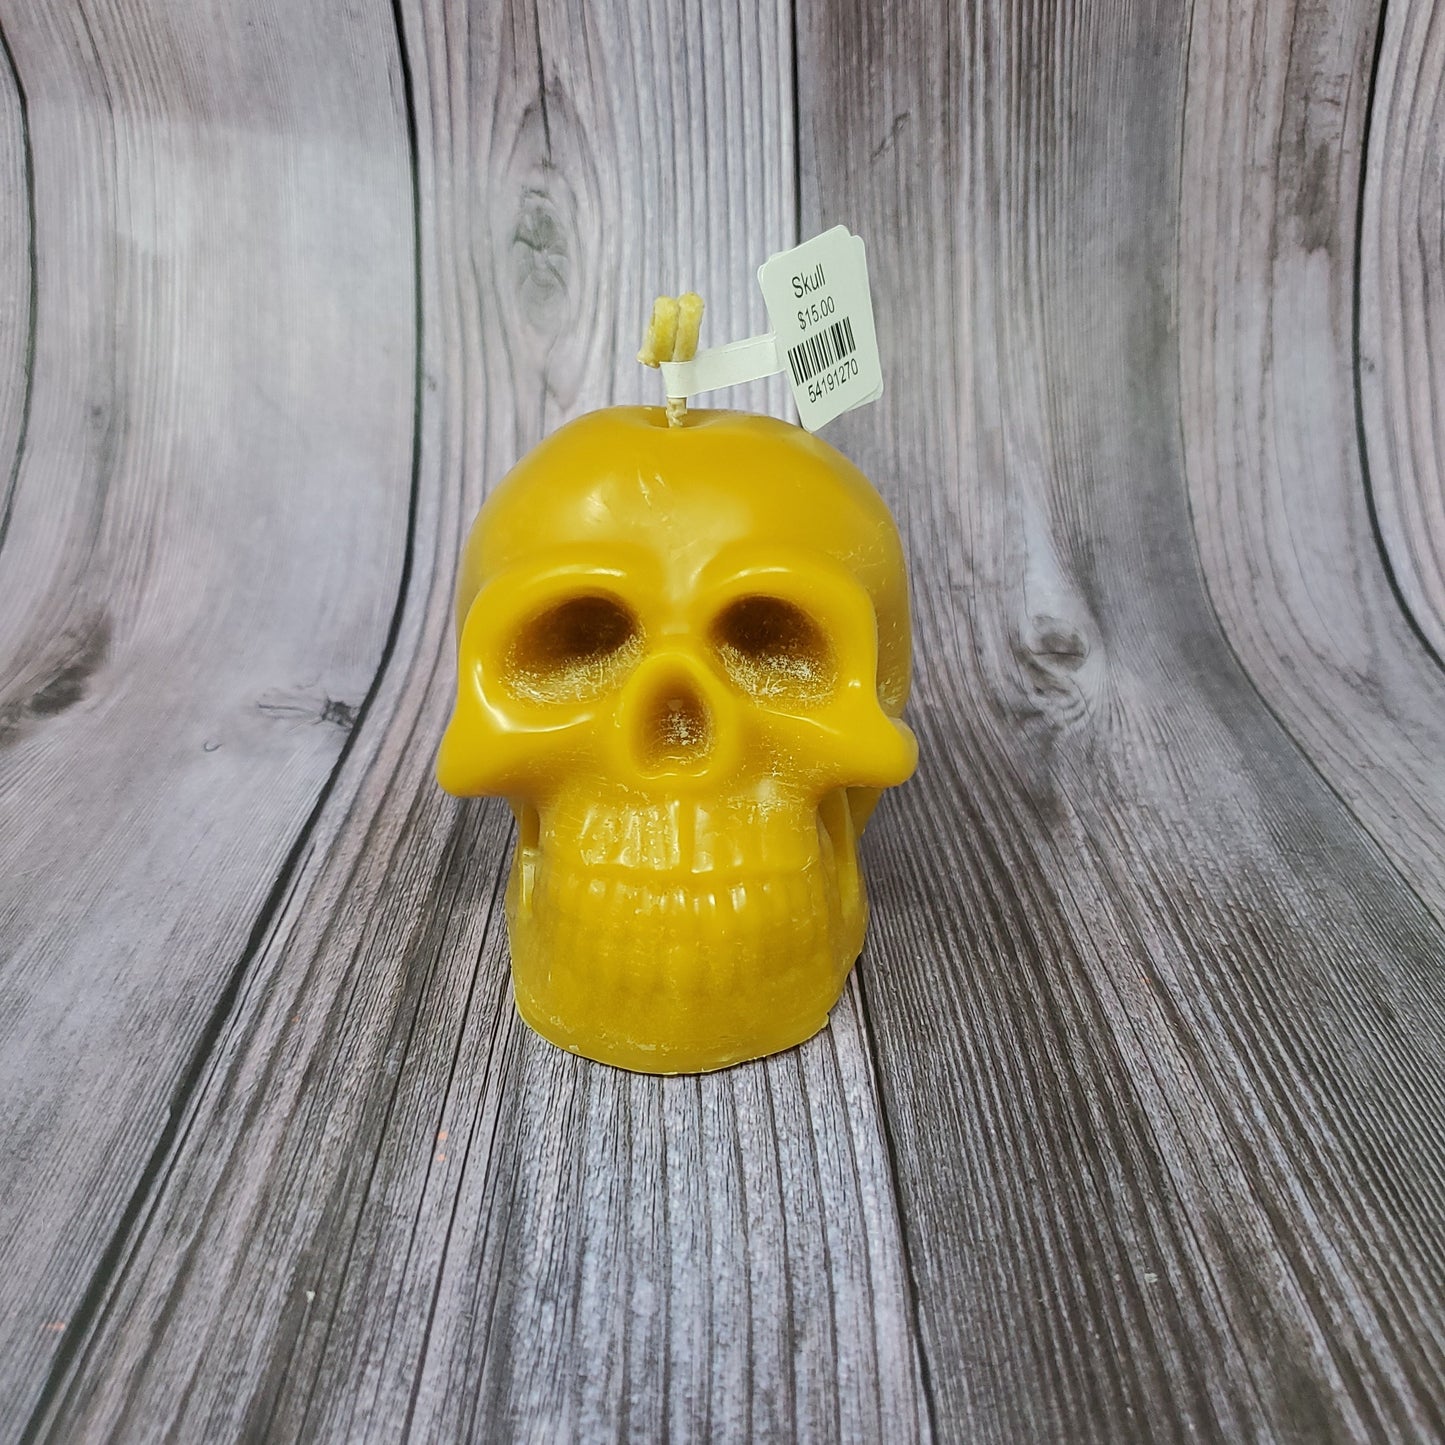 Beeswax Skull Candles - Erikas Crafts